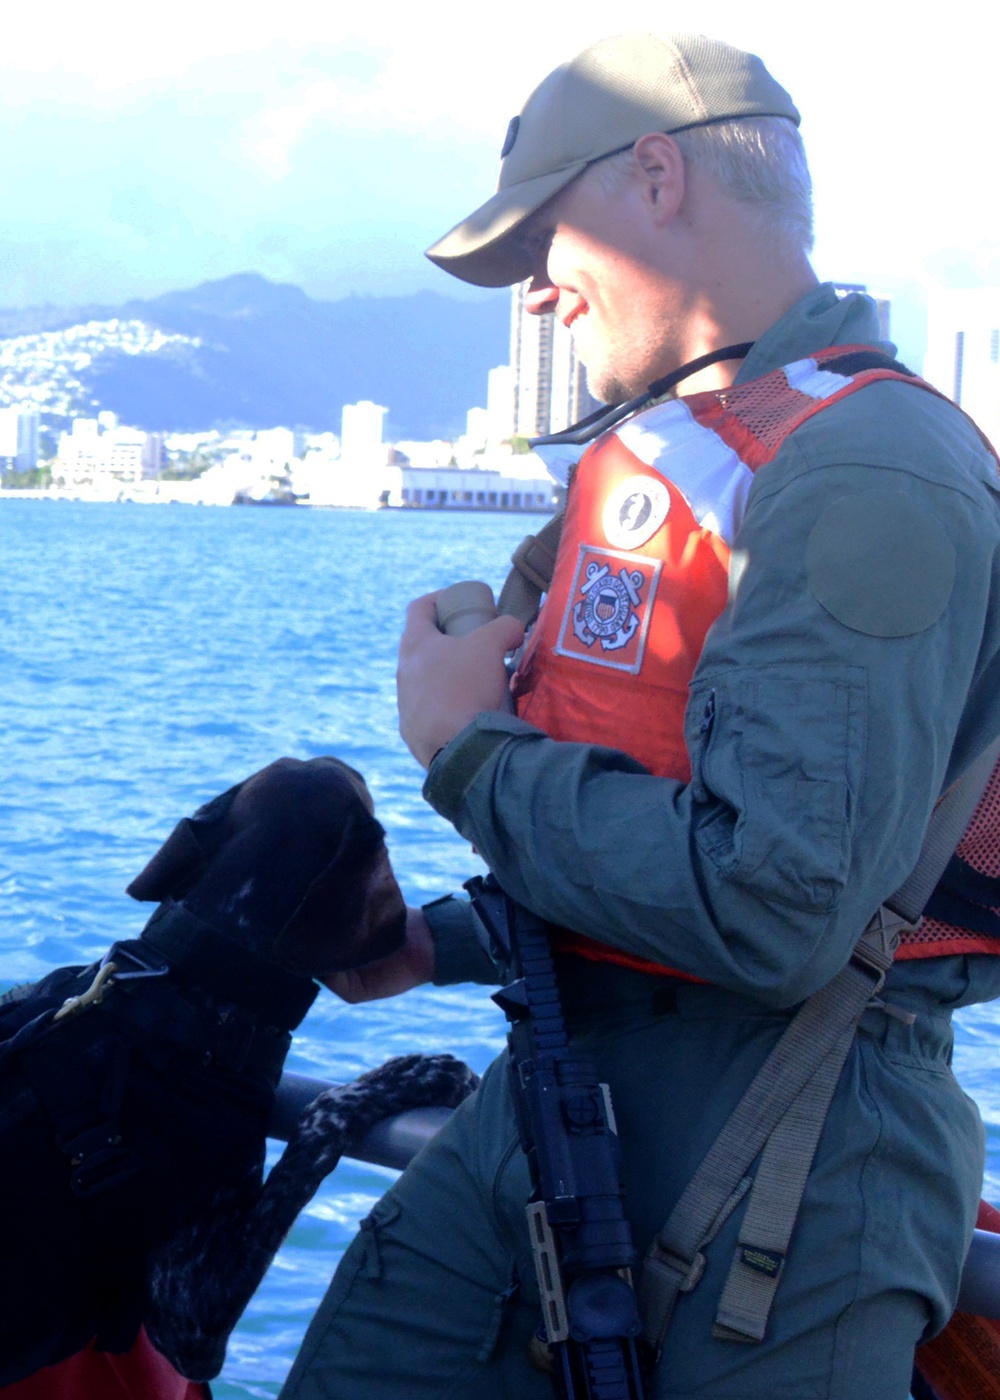 Coast Guard, international partners conduct short-notice maritime response exercise